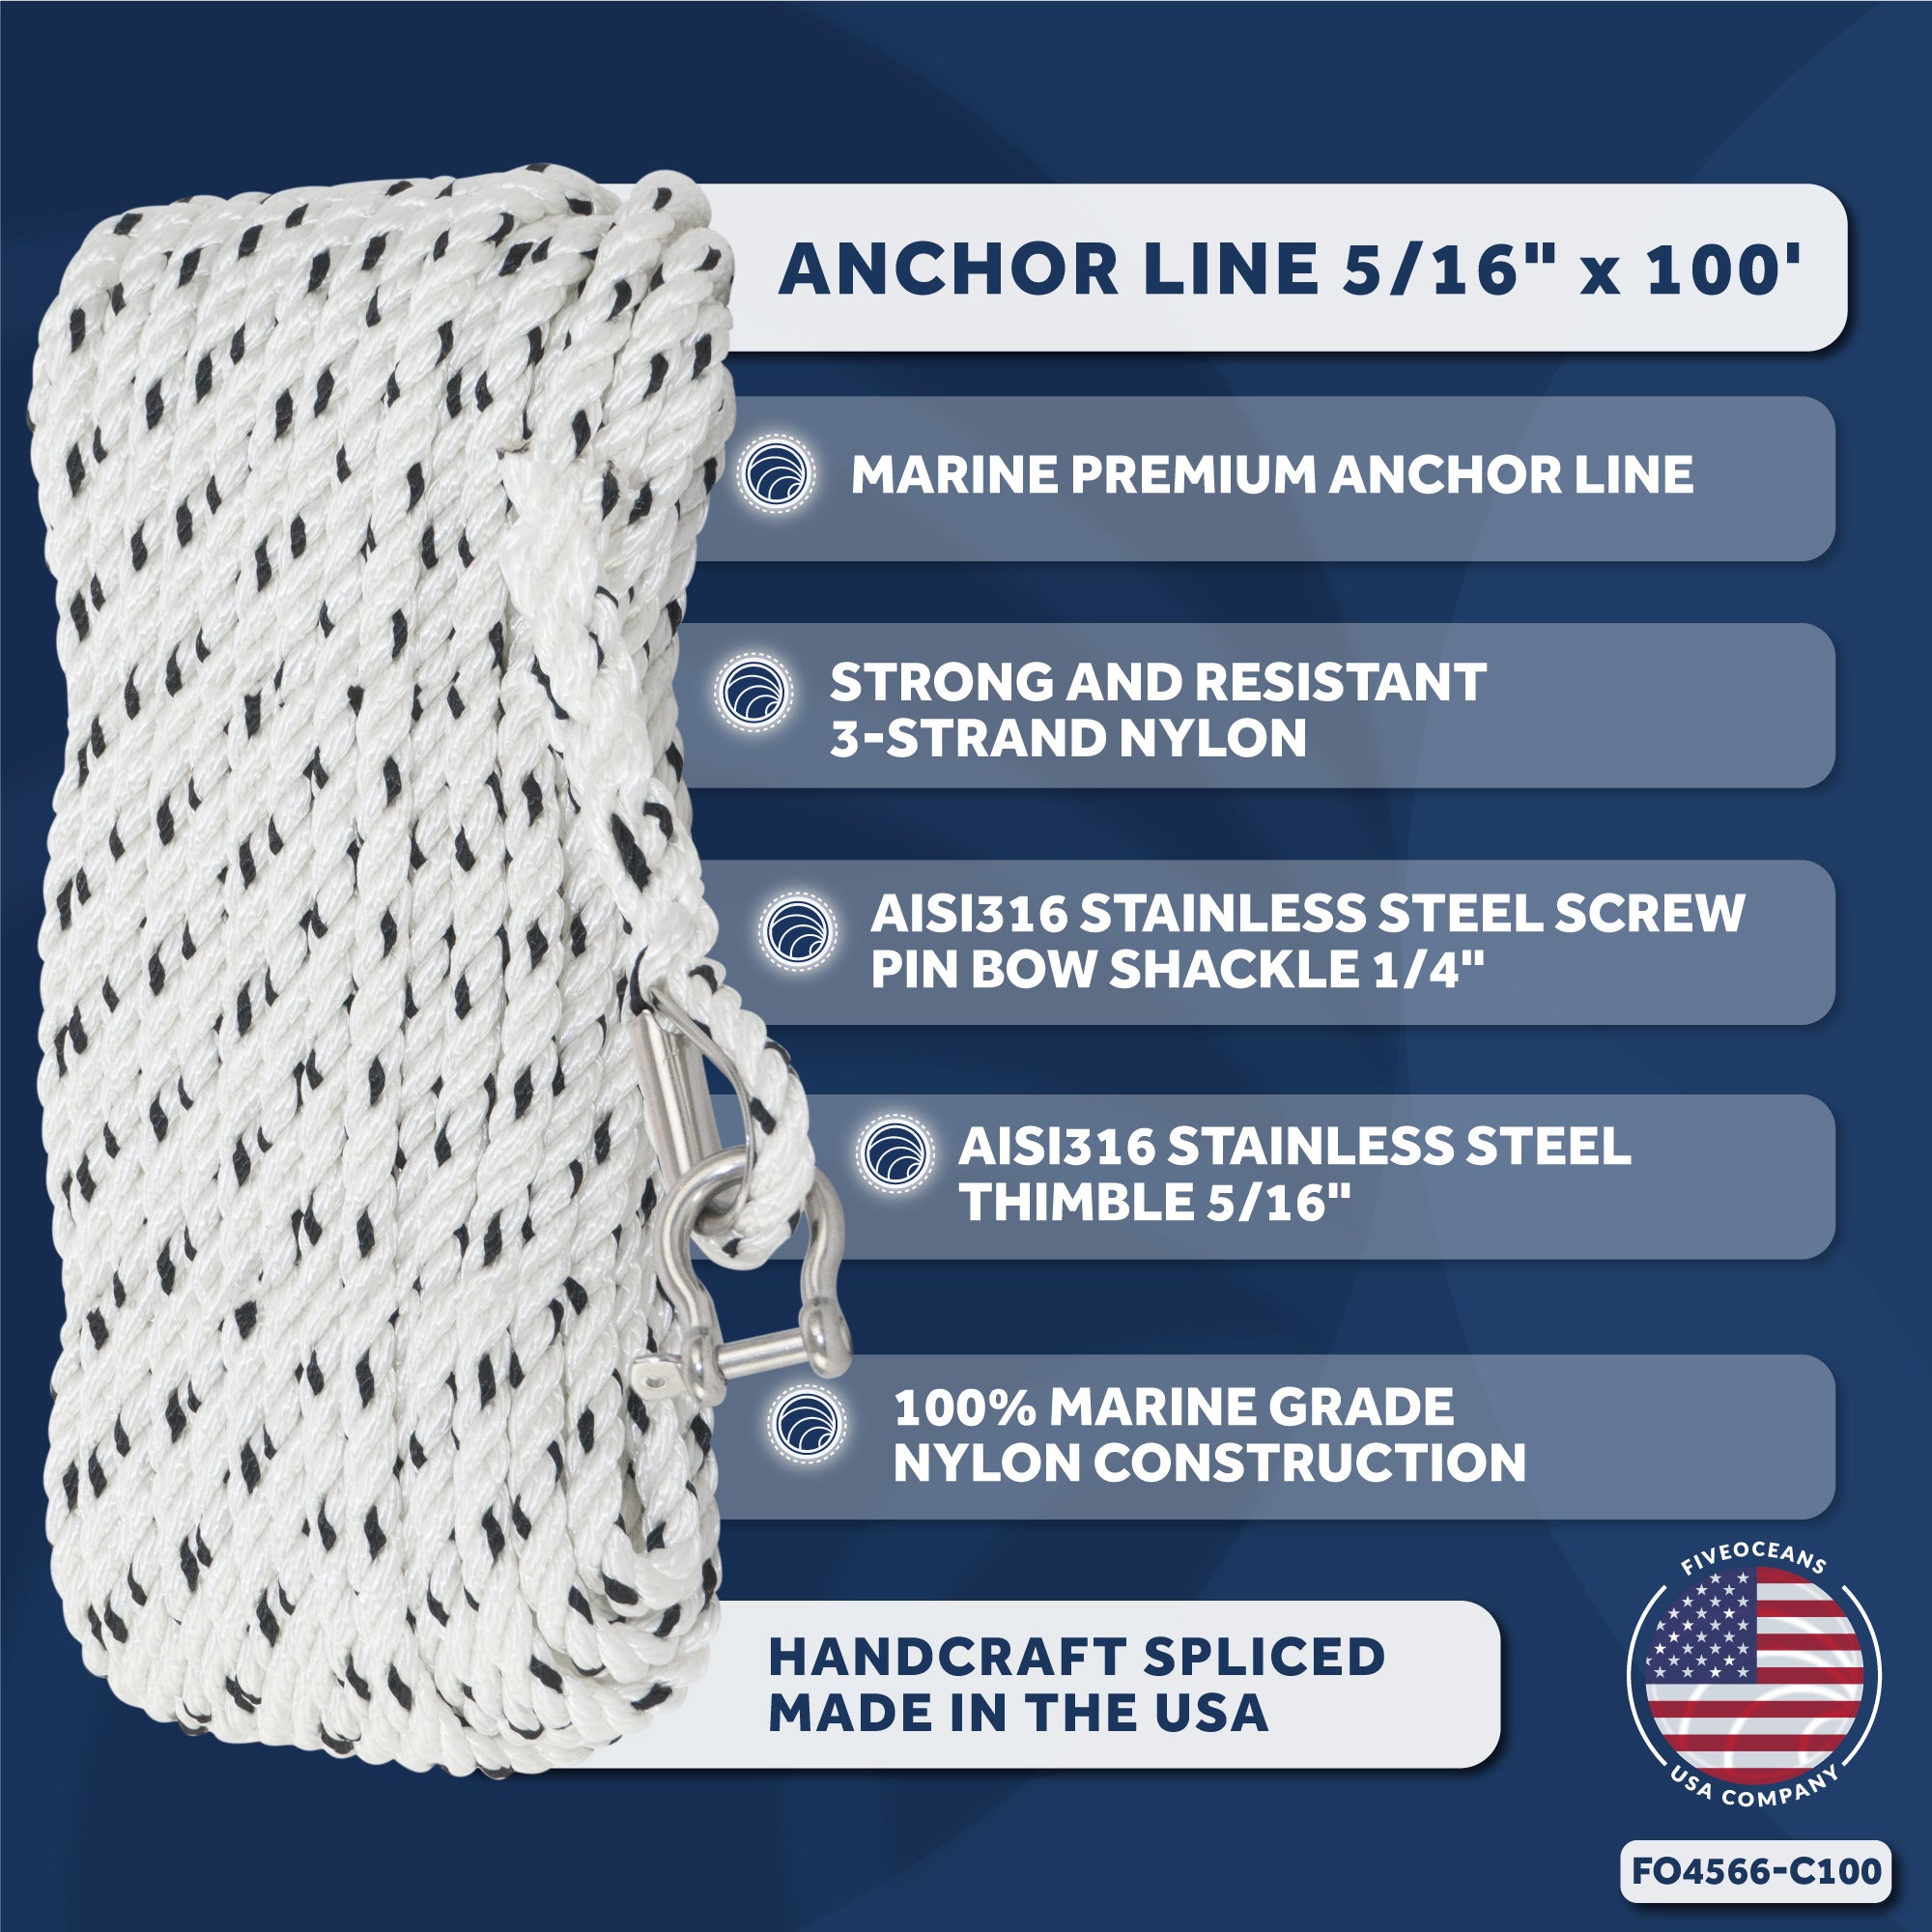 Anchor Line, 5/16" x 100', 3-Strand Nylon Spliced - FO4566-C100